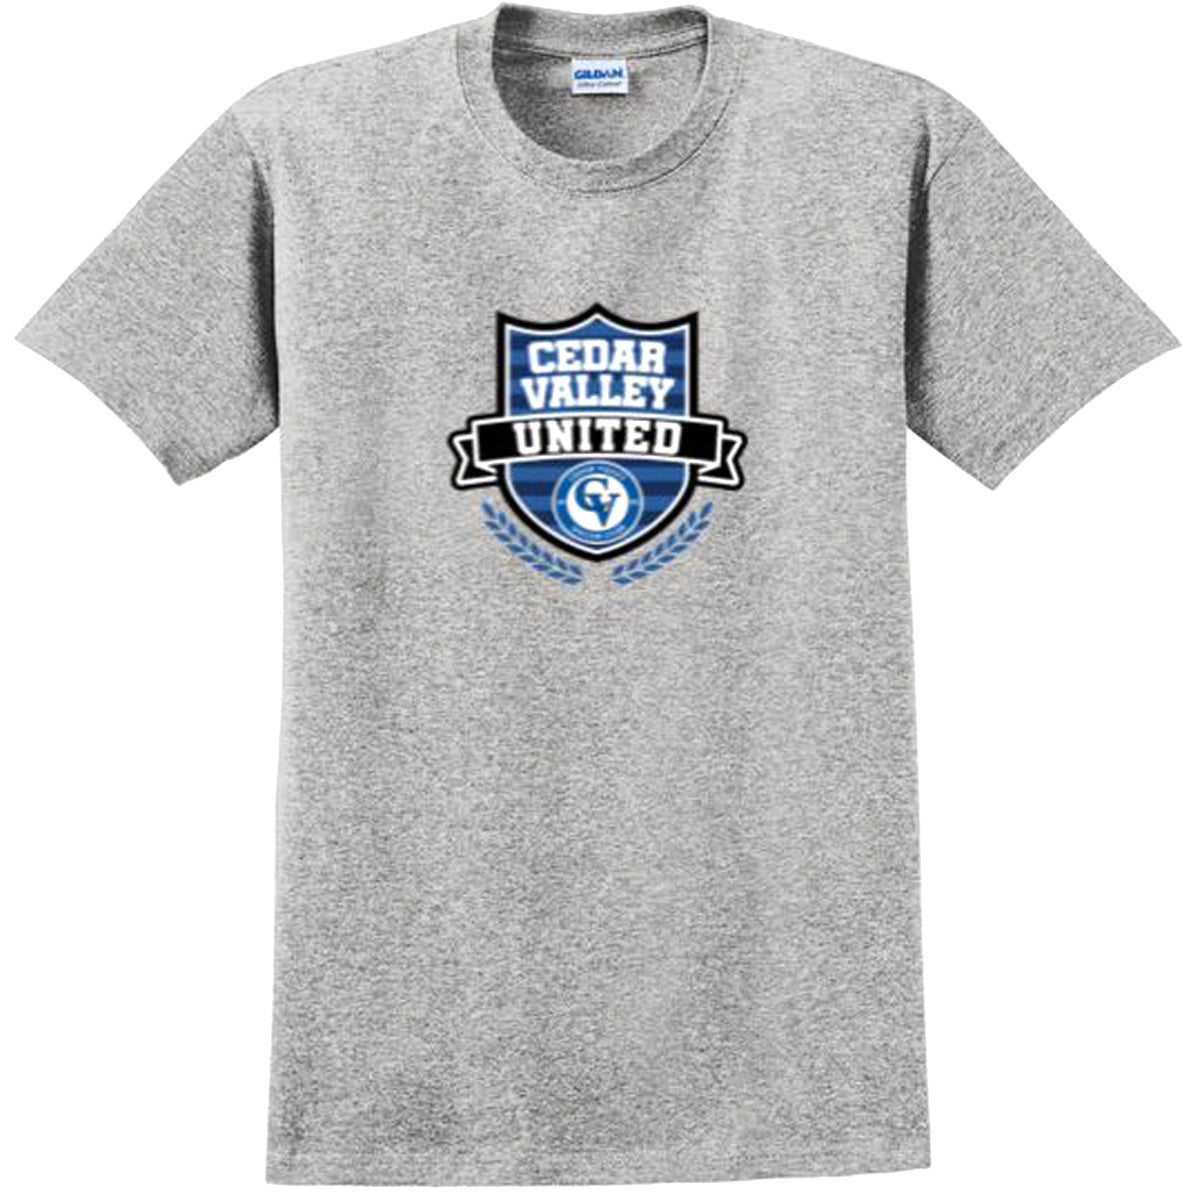 Cedar Valley Soccer Club Ultra Cotton 100% Cotton T-Shirt Sweatshirt Gildan Men's Small Sport Grey 